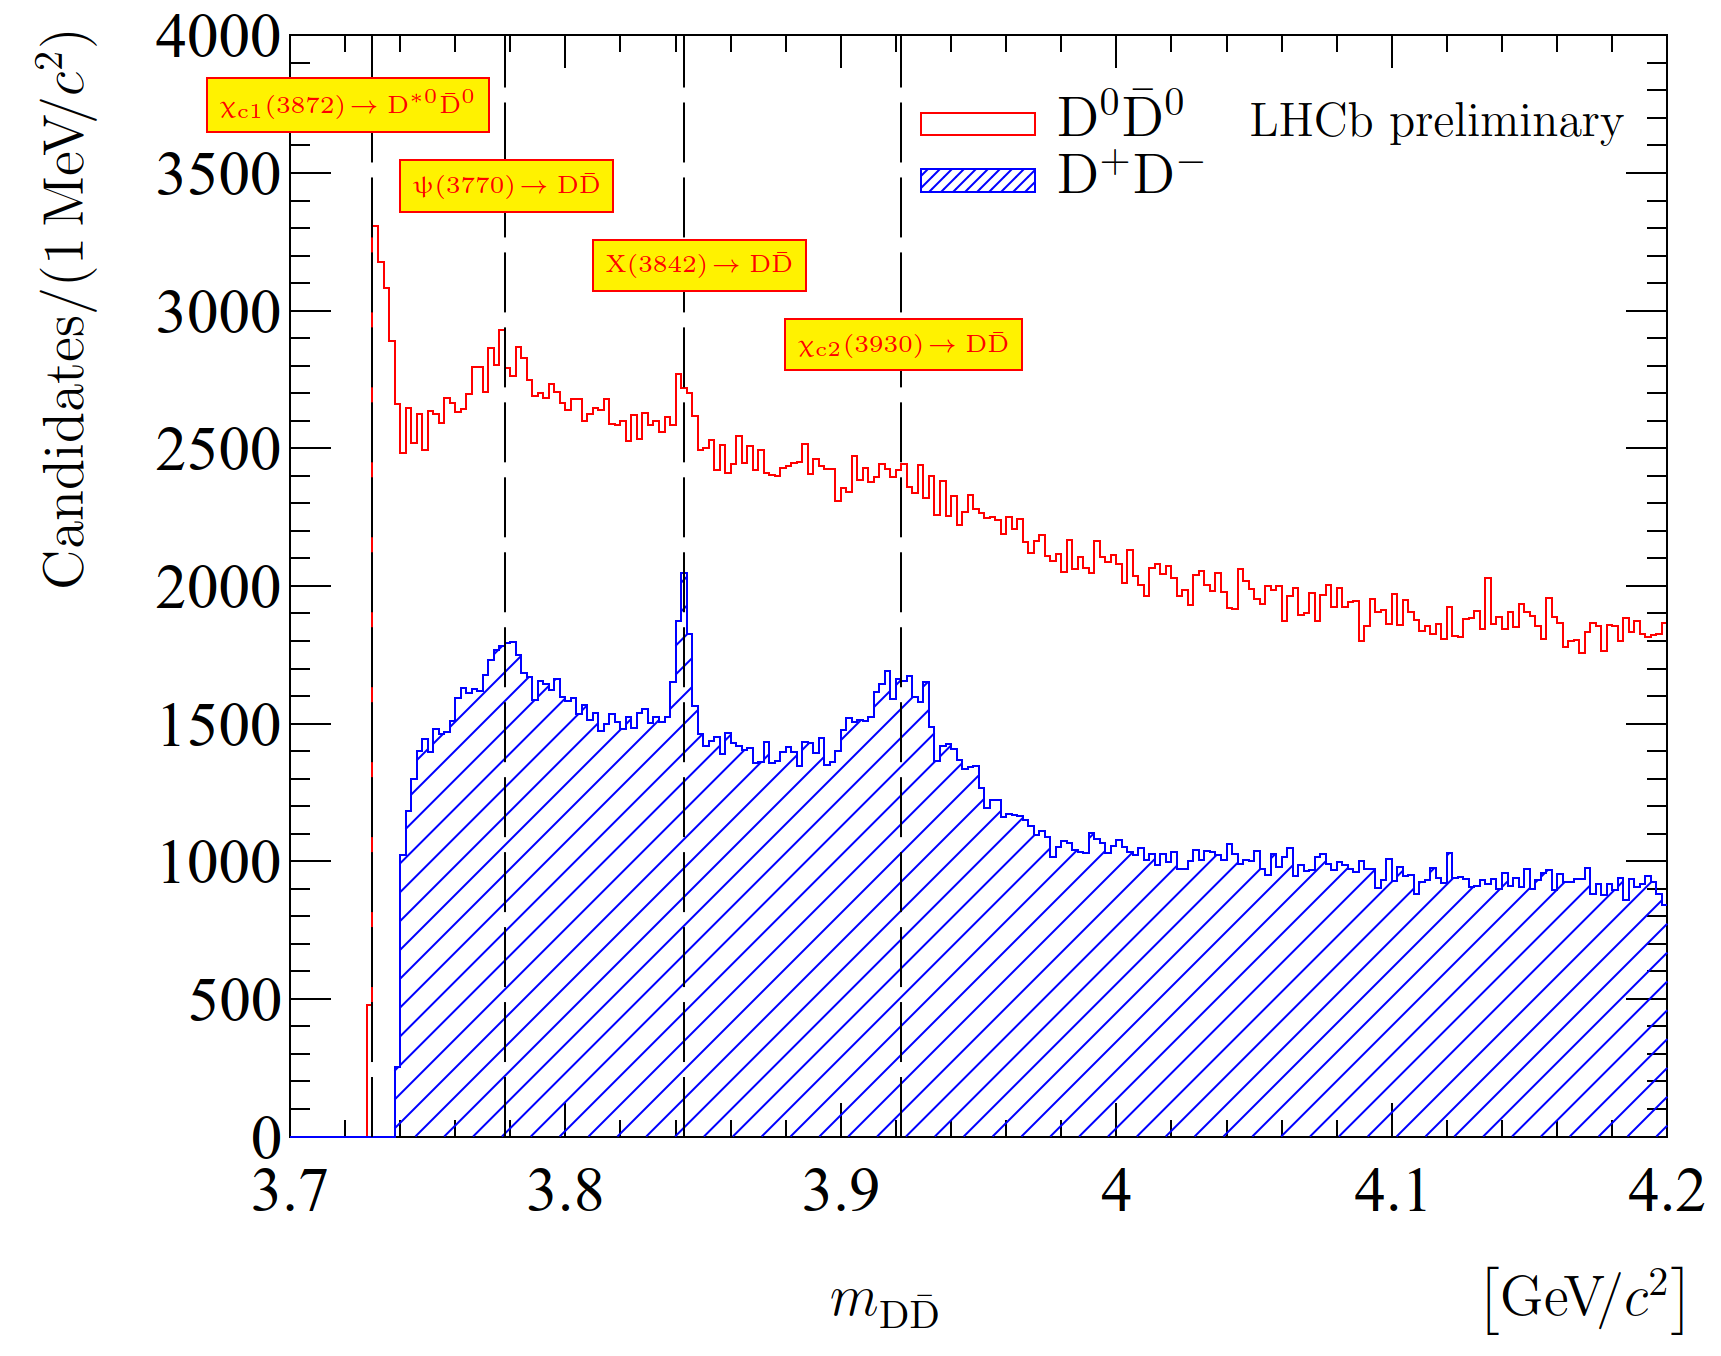 Charmonium resonances in the DD spectra